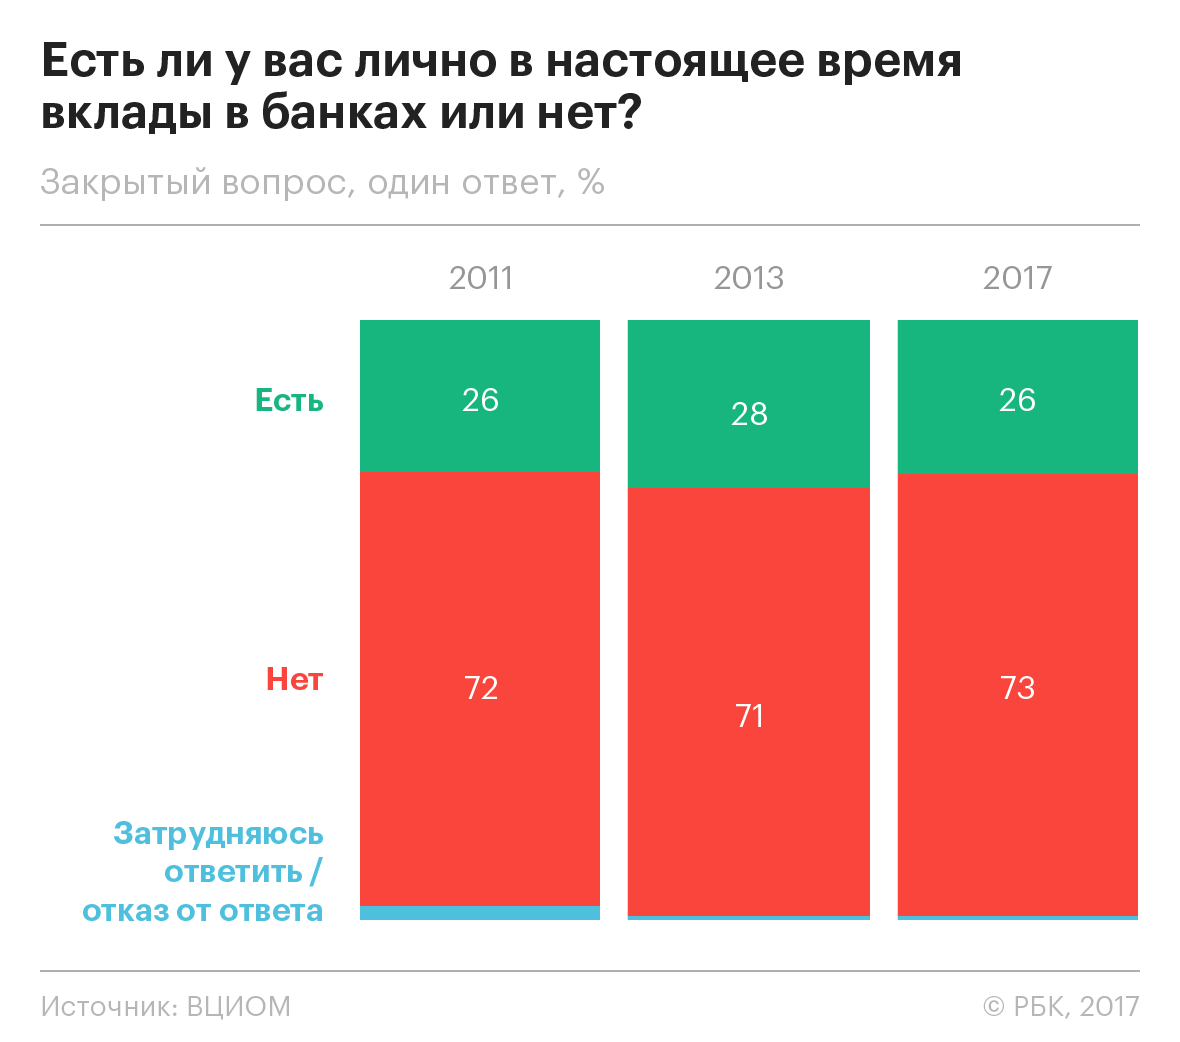 Почти половина россиян допустили скорый банковский кризис